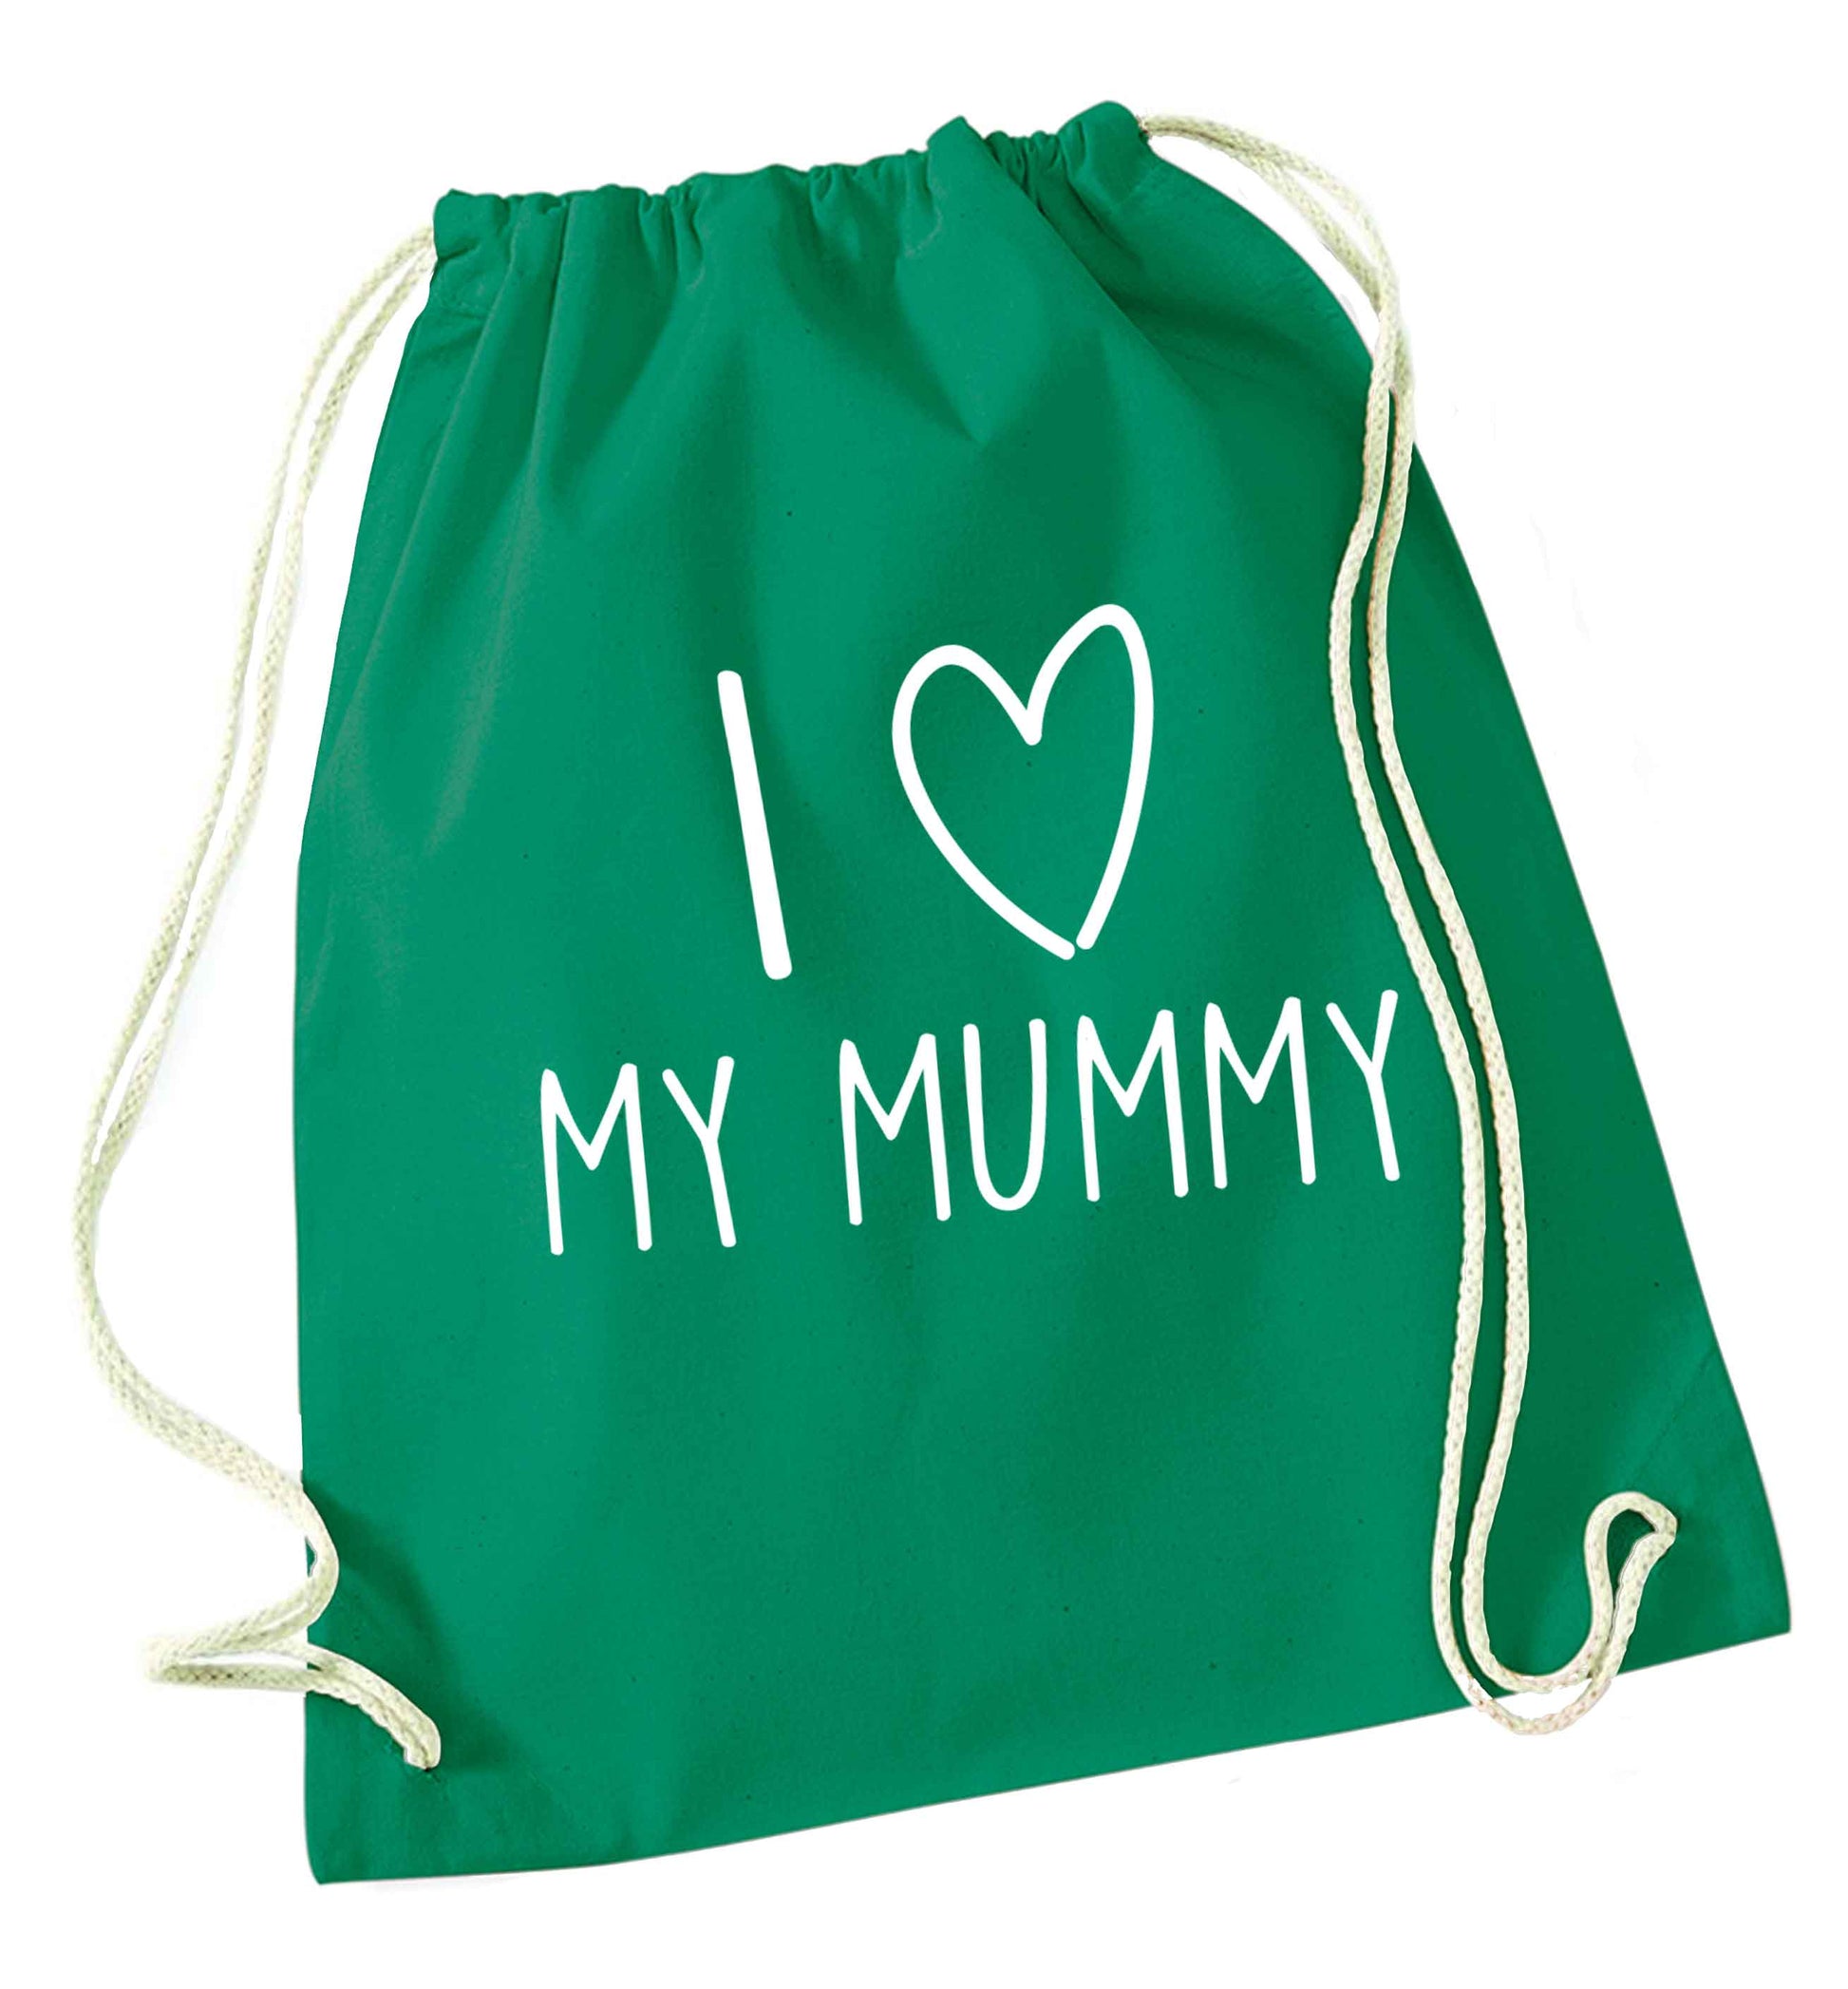 I love my mummy green drawstring bag